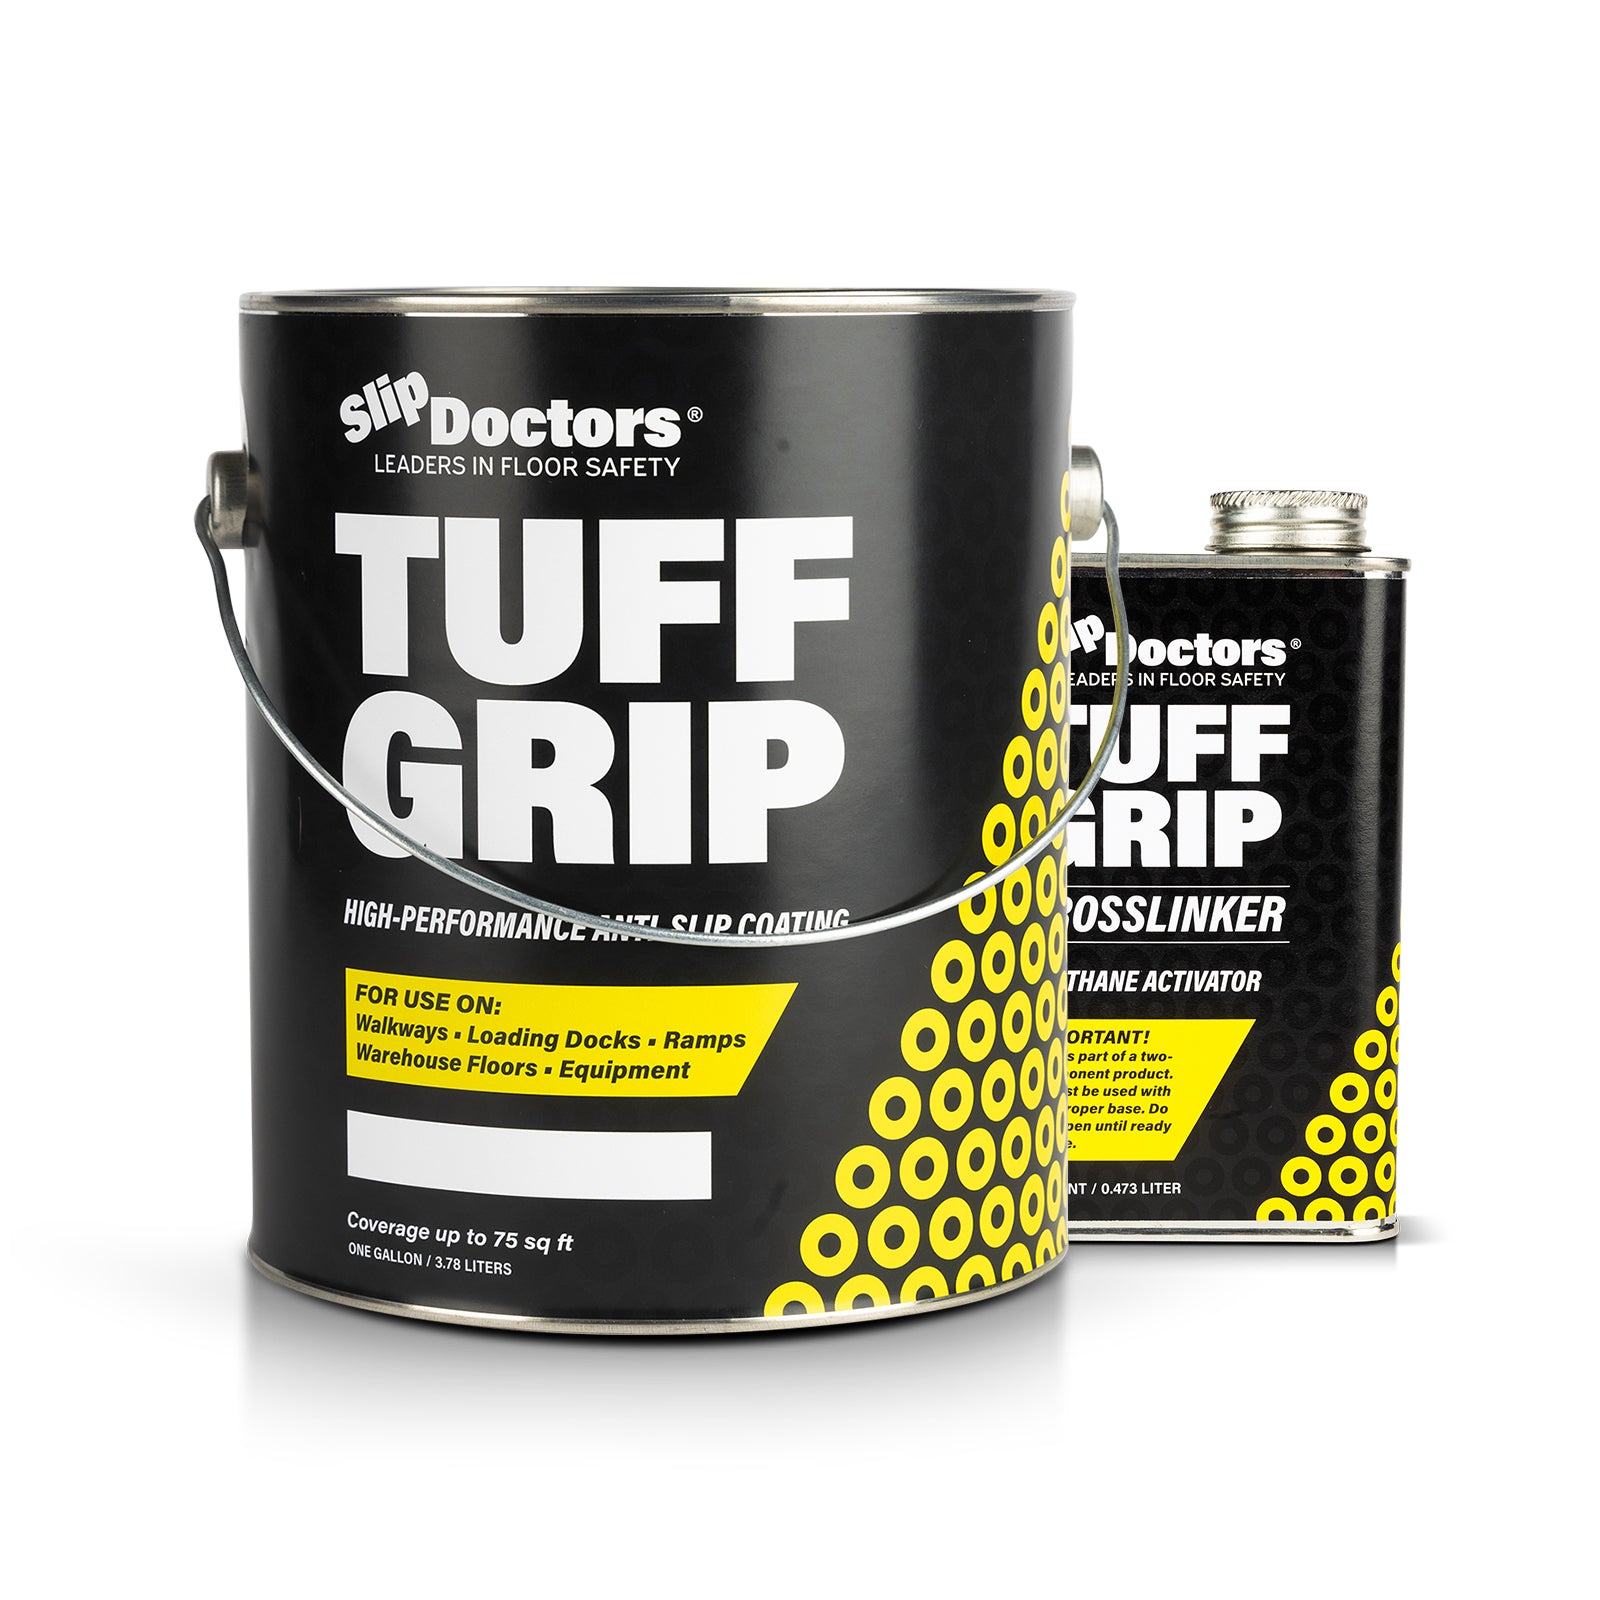 Tuff-n-Lastic Anti-Slip Flooring - The Rubber Flooring Experts